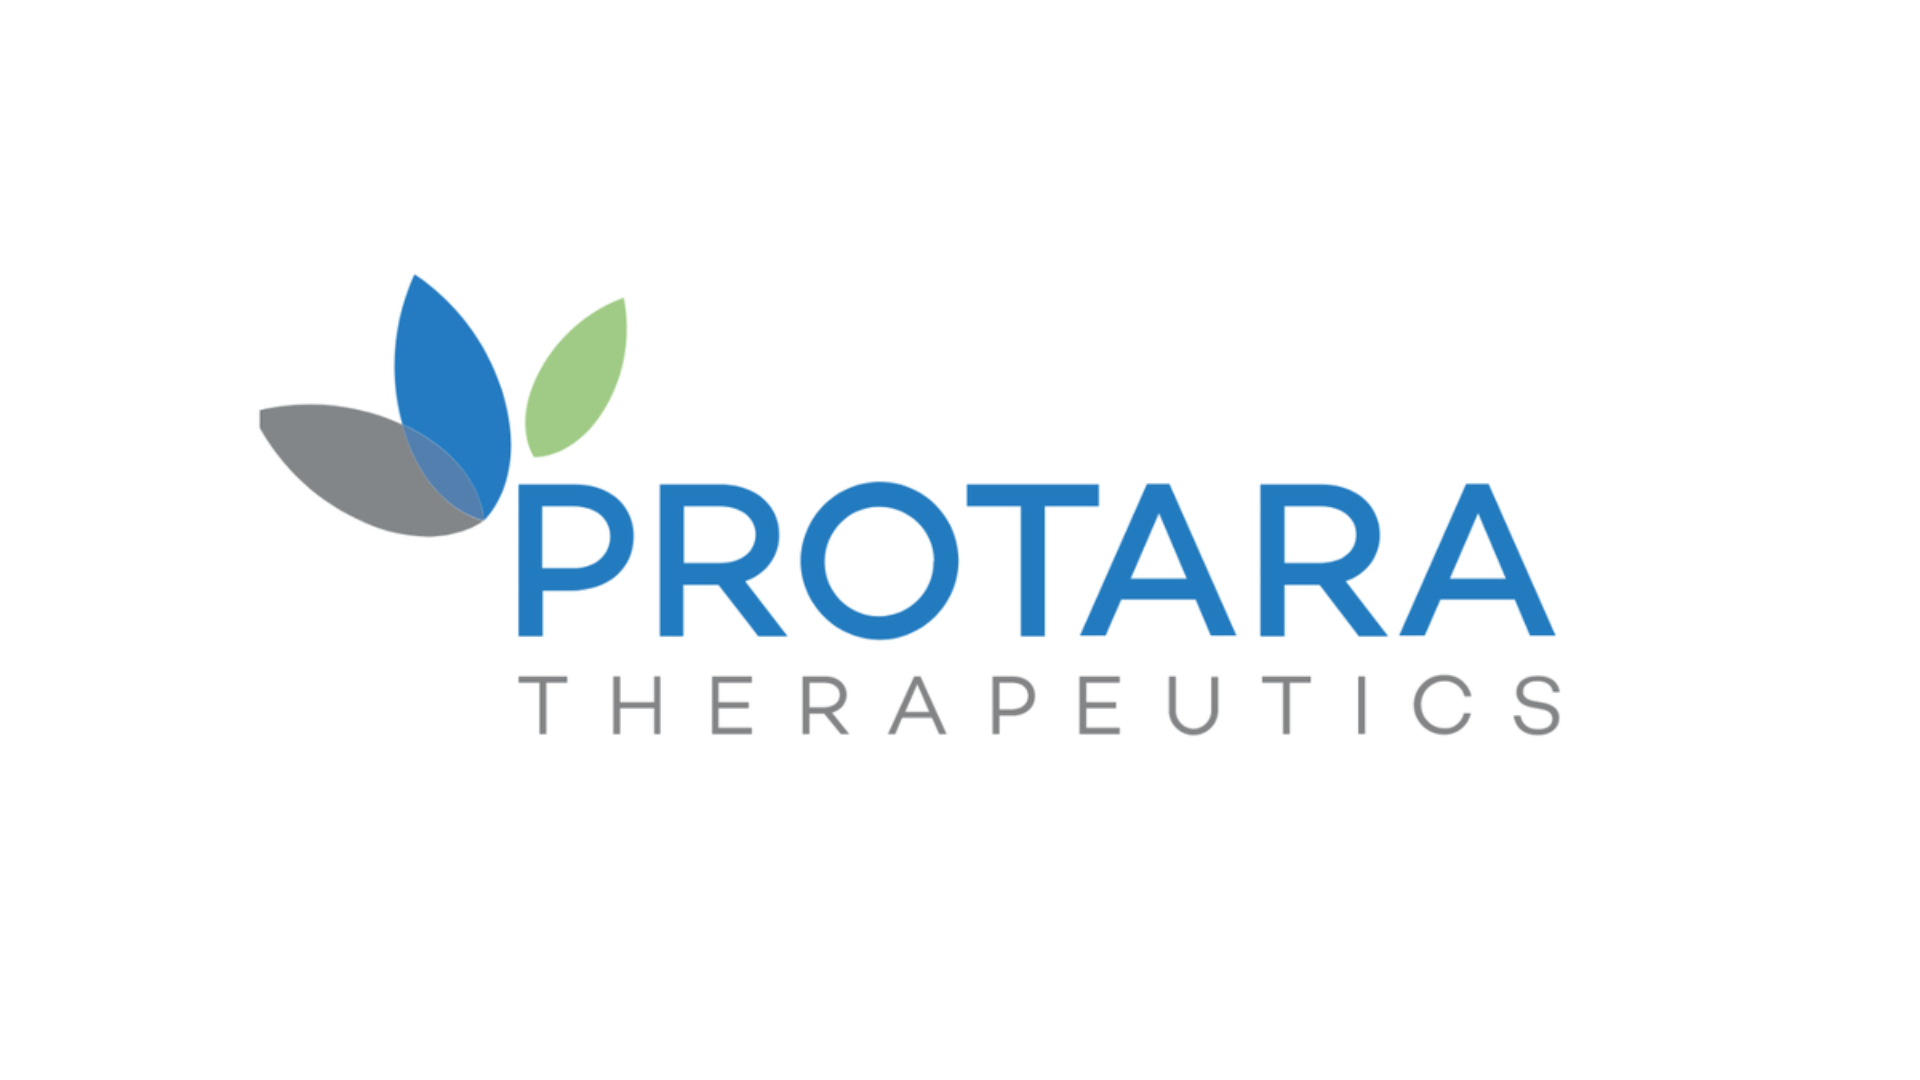 Protara Therapeutics logo Cure Collaboration Residency